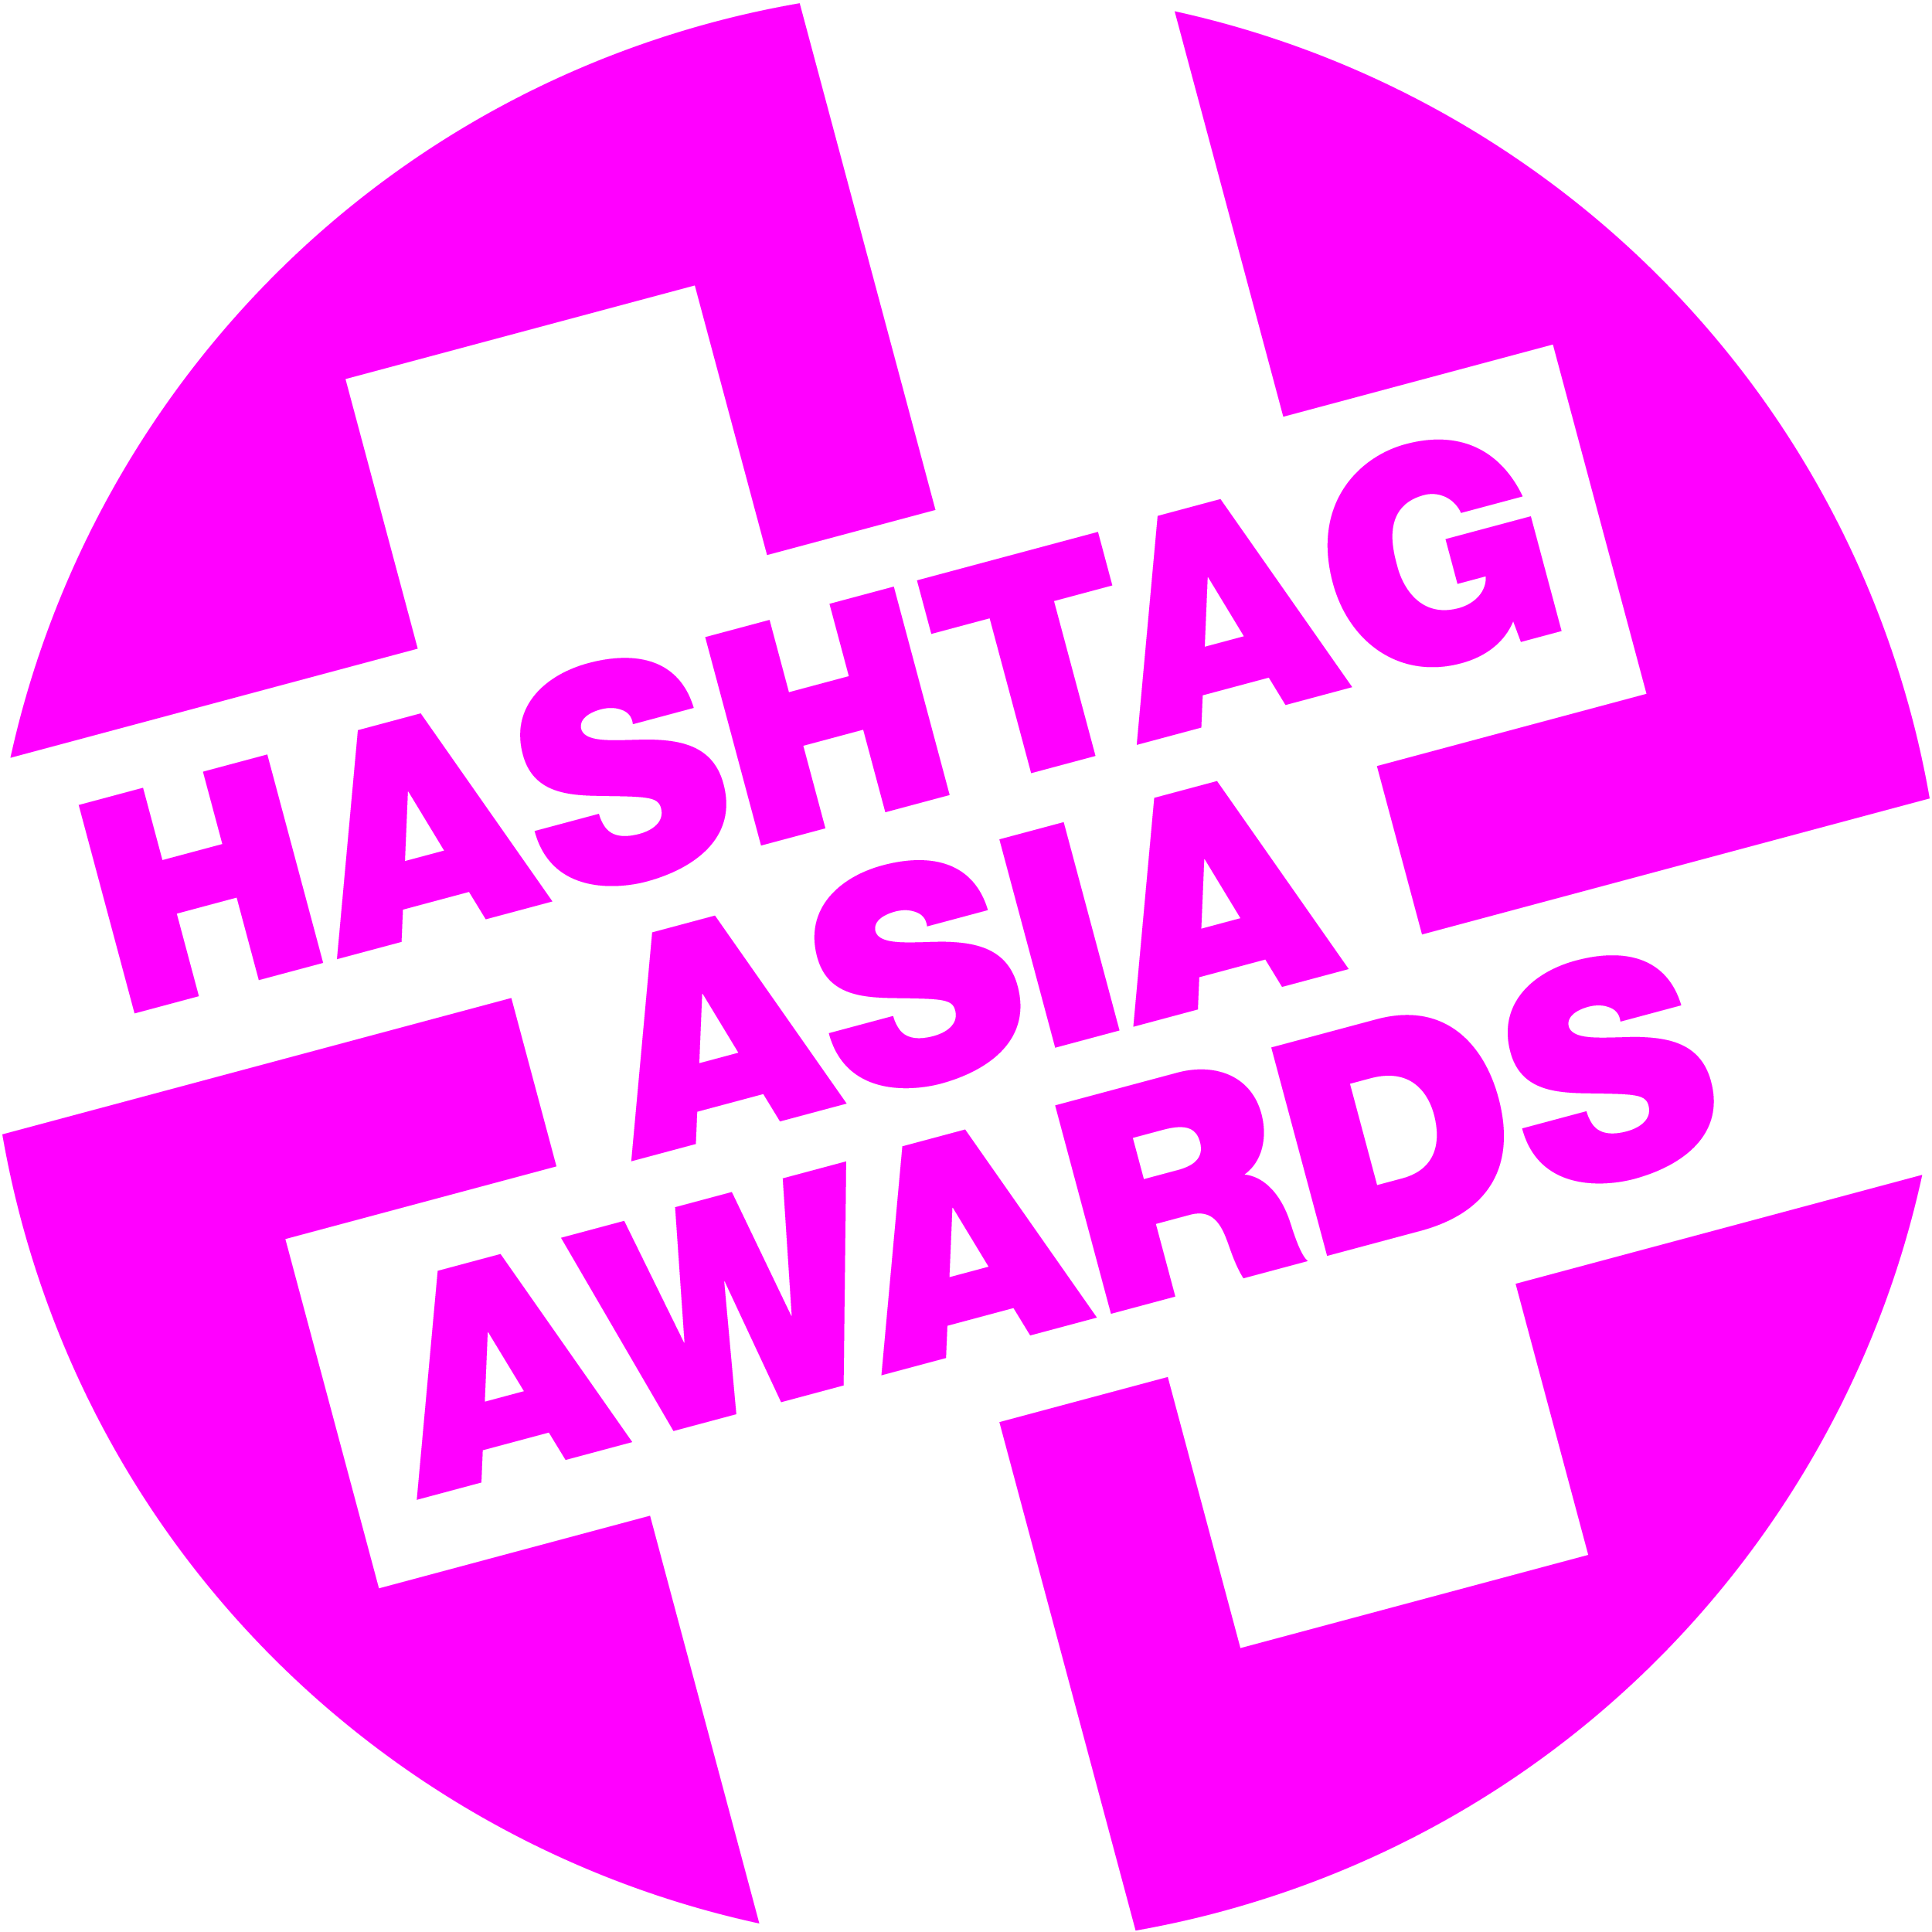 Hashtag亚洲